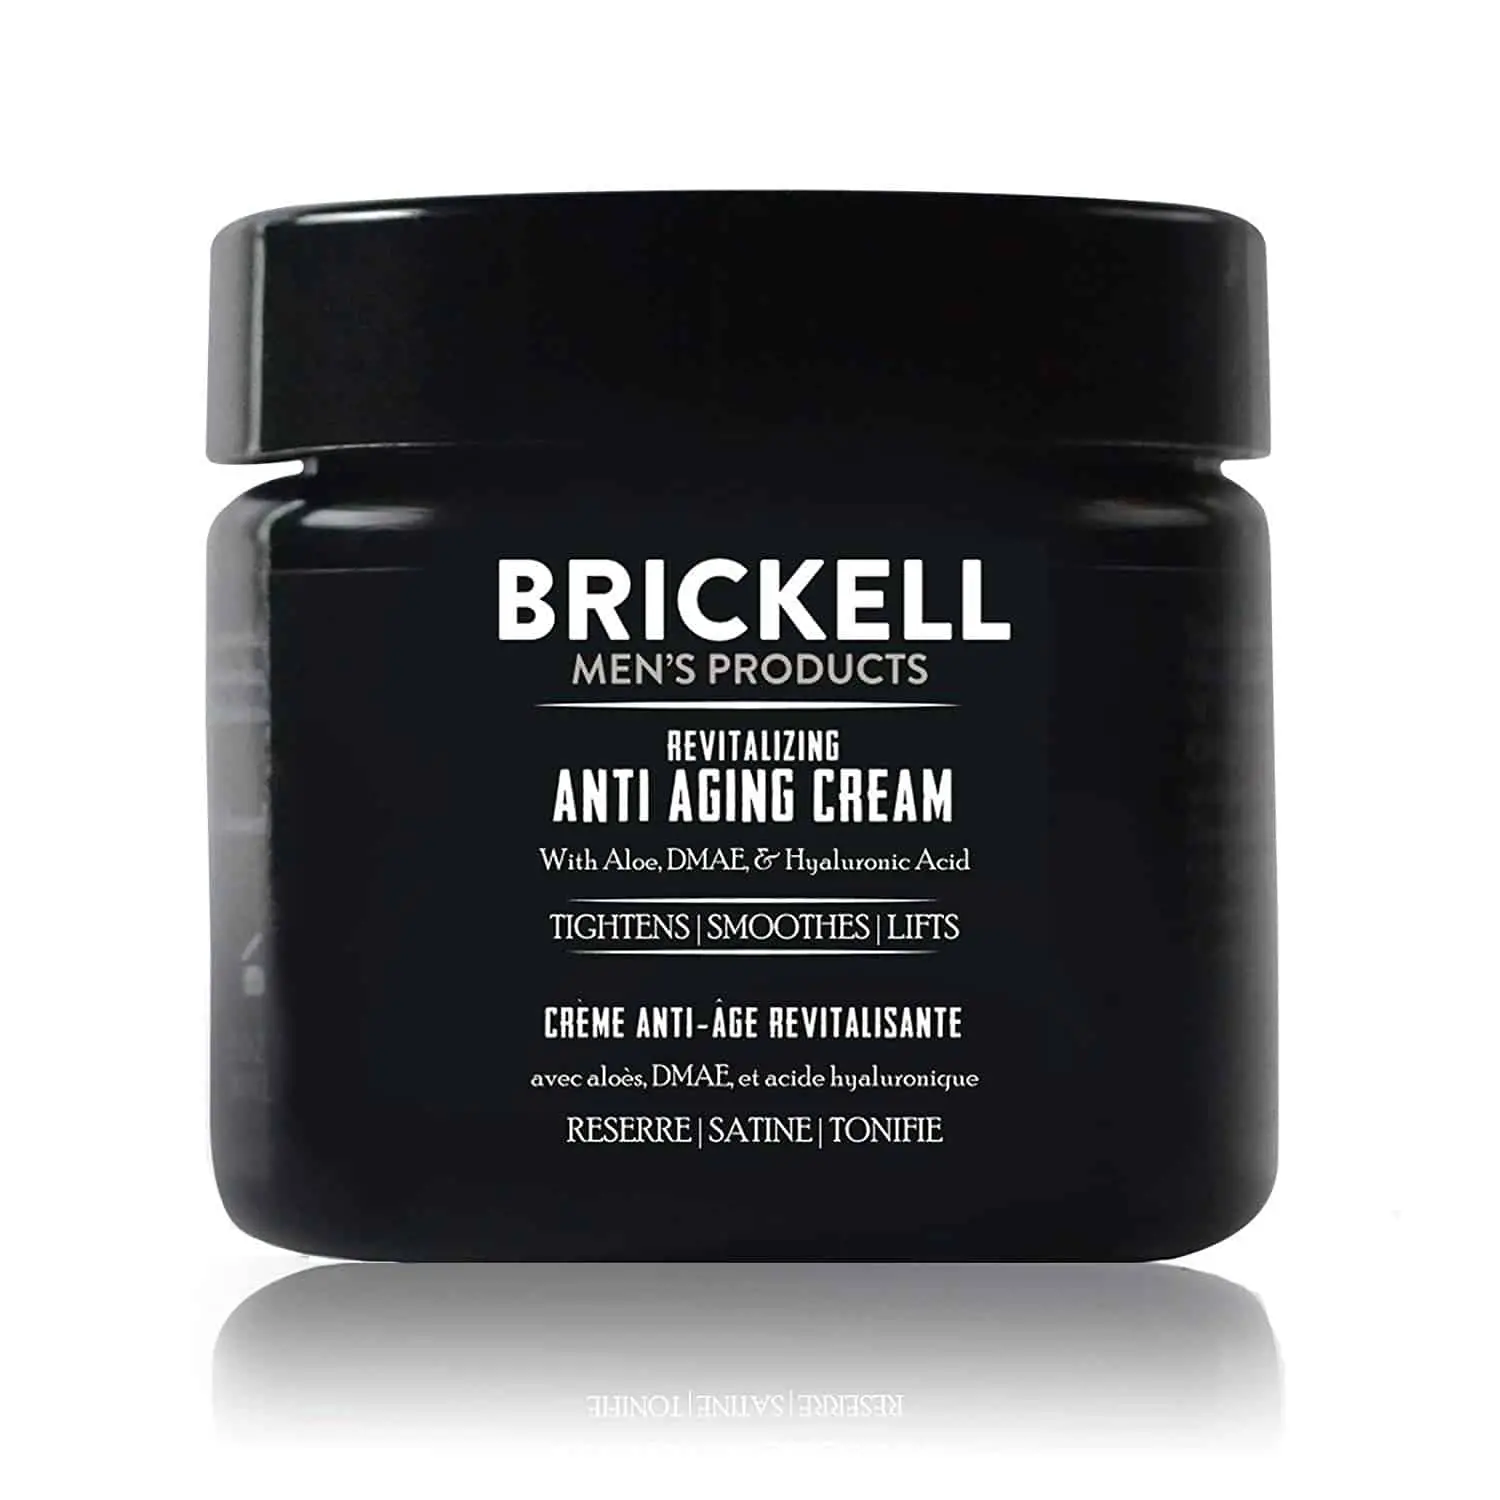 Brickell Anti-Aging Cream Review